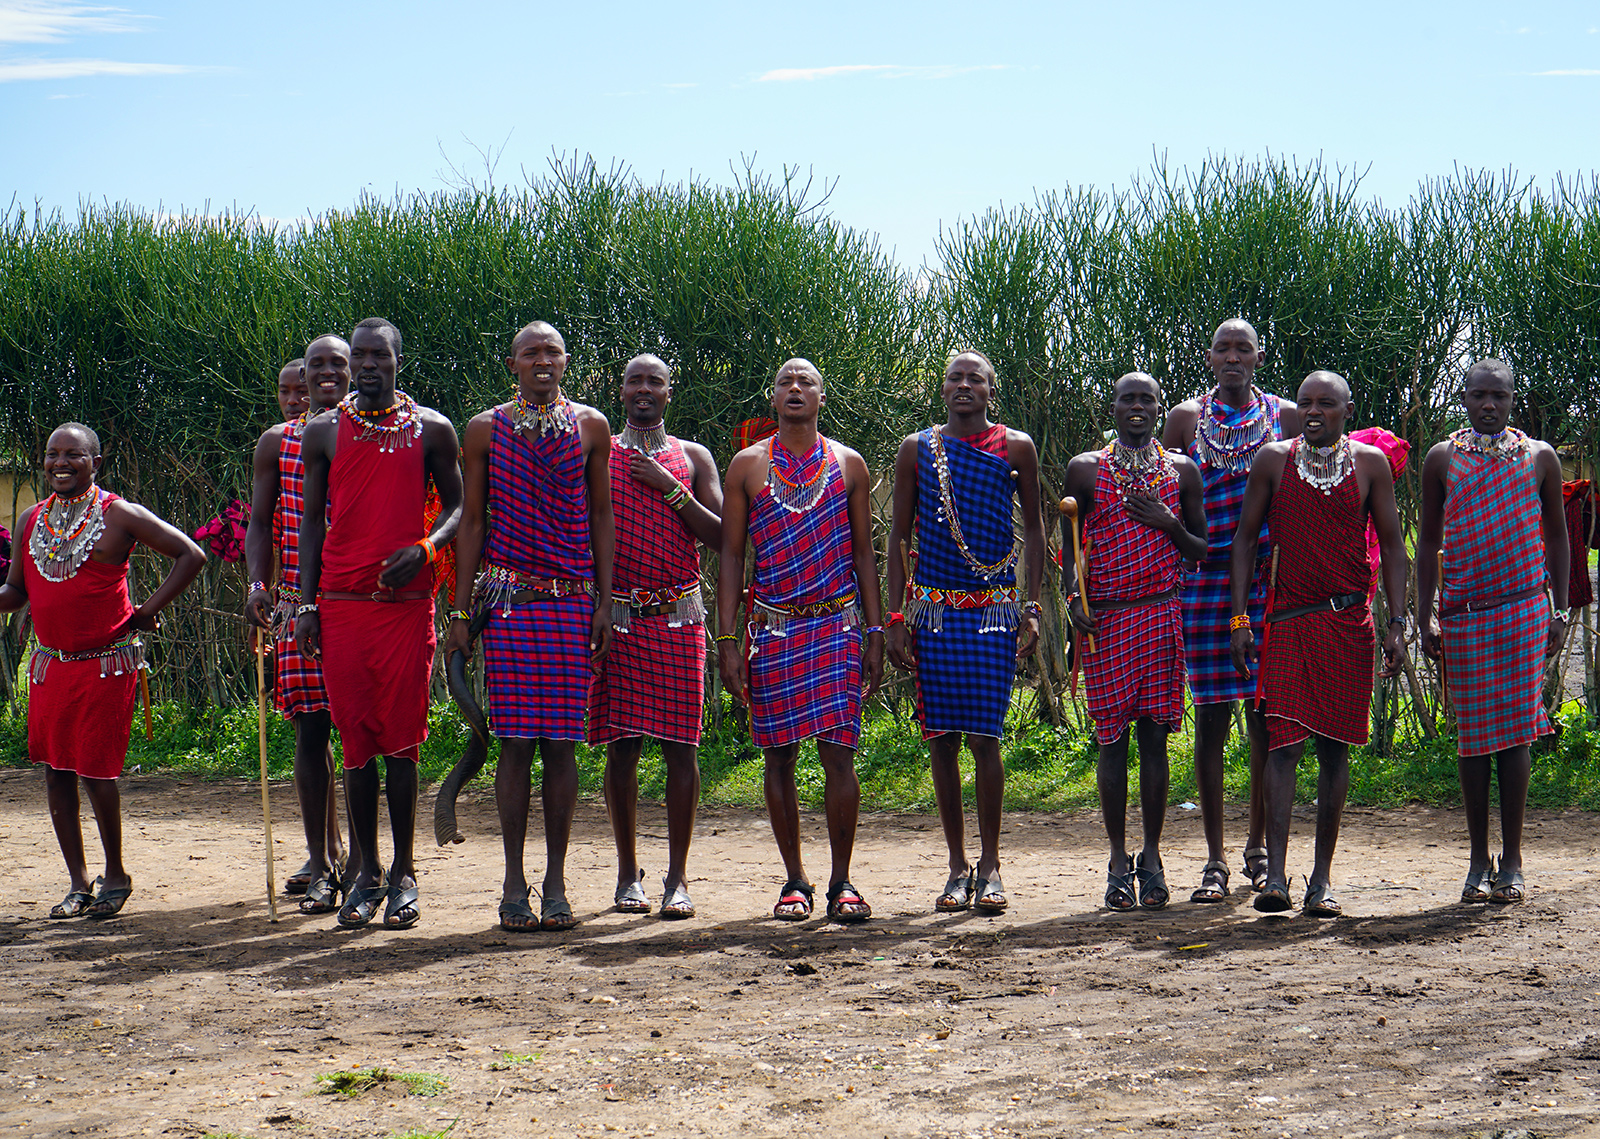 We visited a Maasai village and got to meet a bunch of warriors